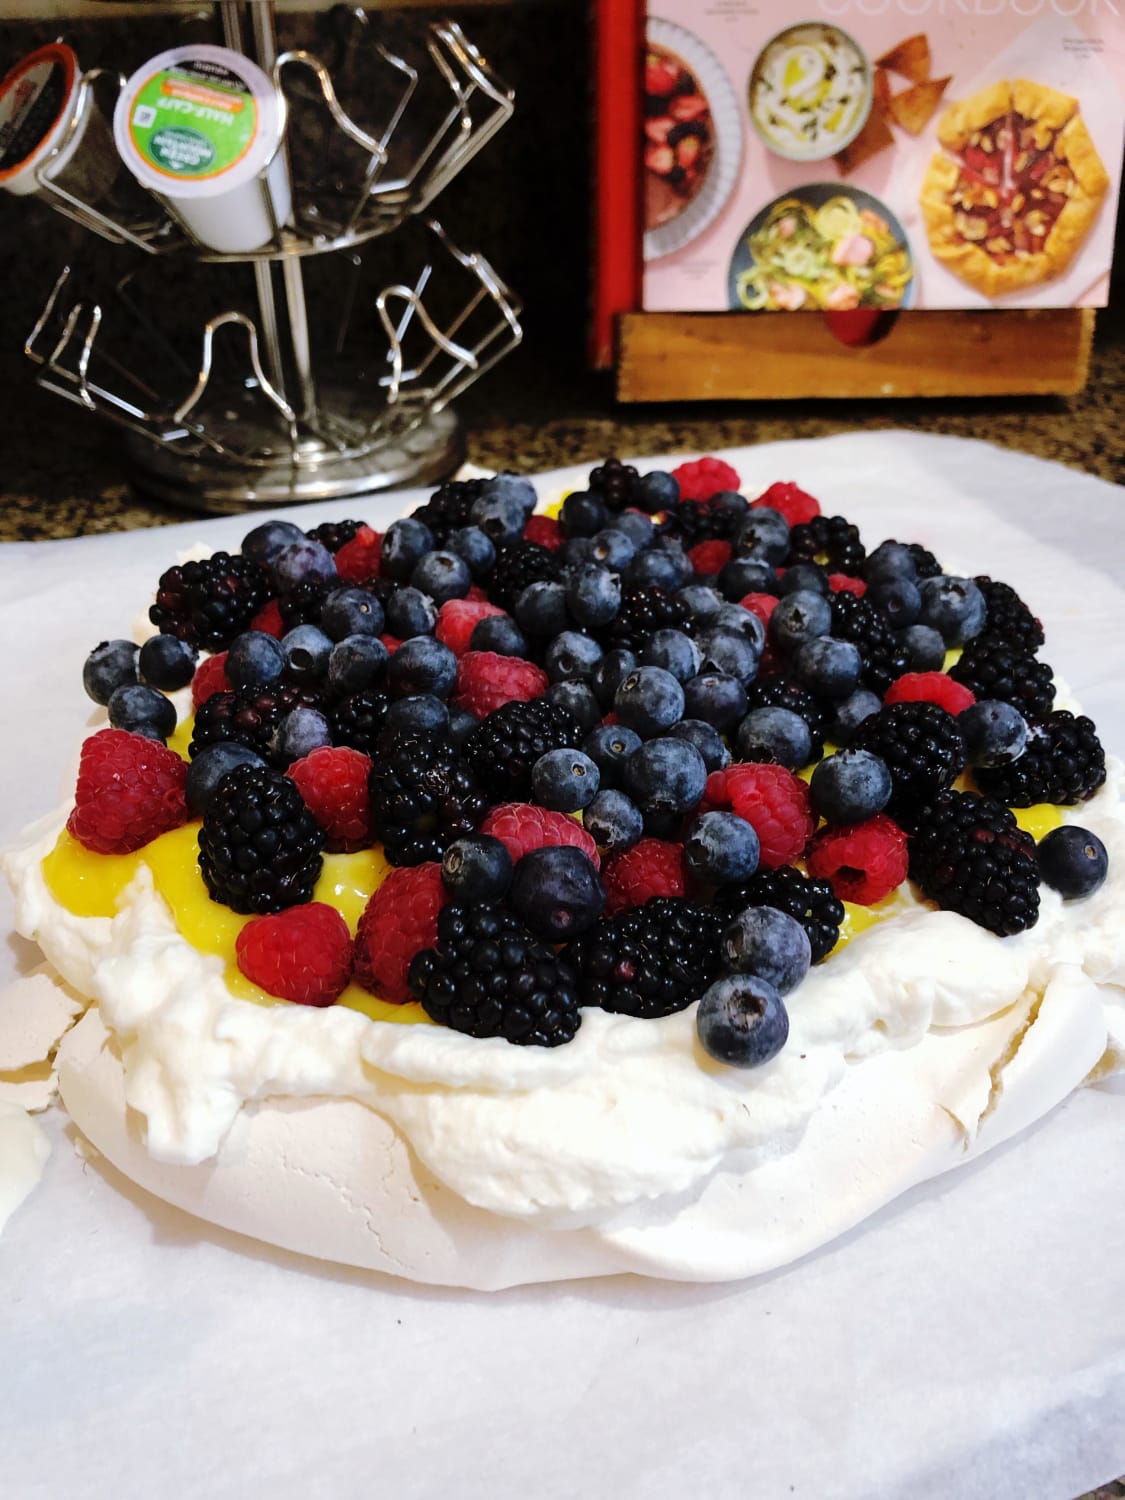 [Homemade] Pavlova with homemade lemon curd, homemade whipped cream, and fresh berries